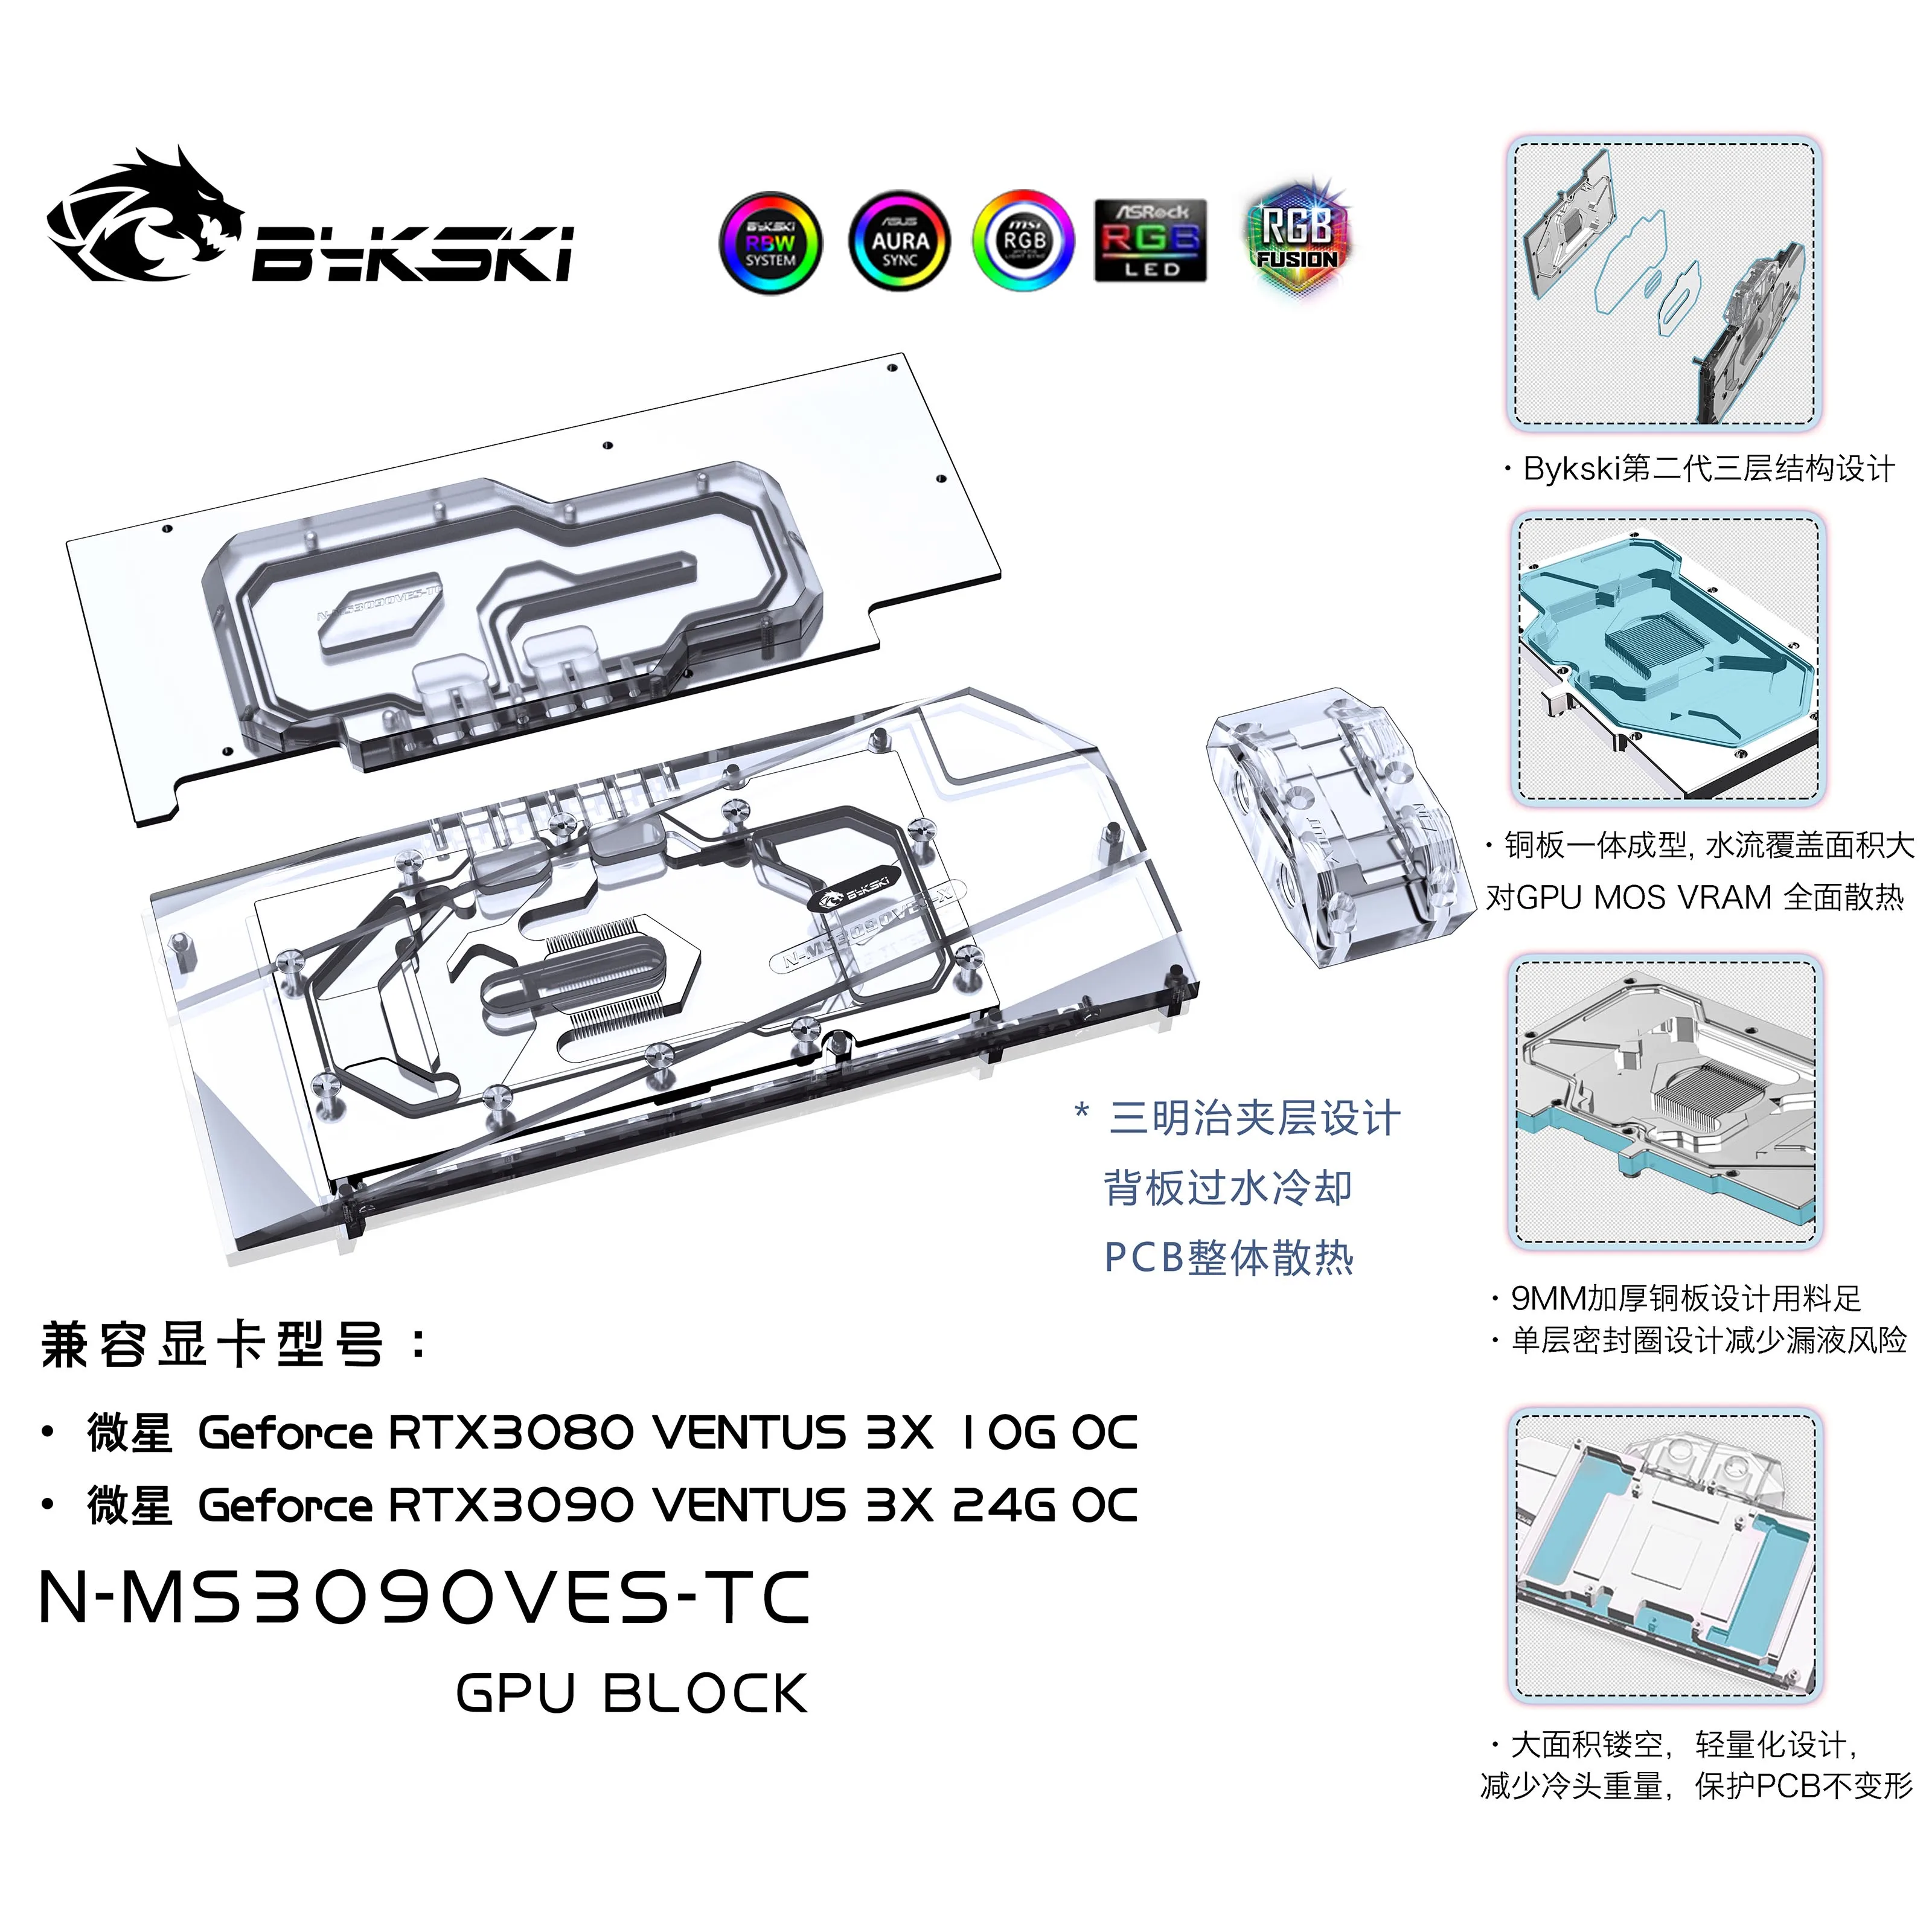 Bykski N-MS3090VES-TC PC water cooling GPU cooler video card back plate water block for MSI RTX 3090 3080 Ventus